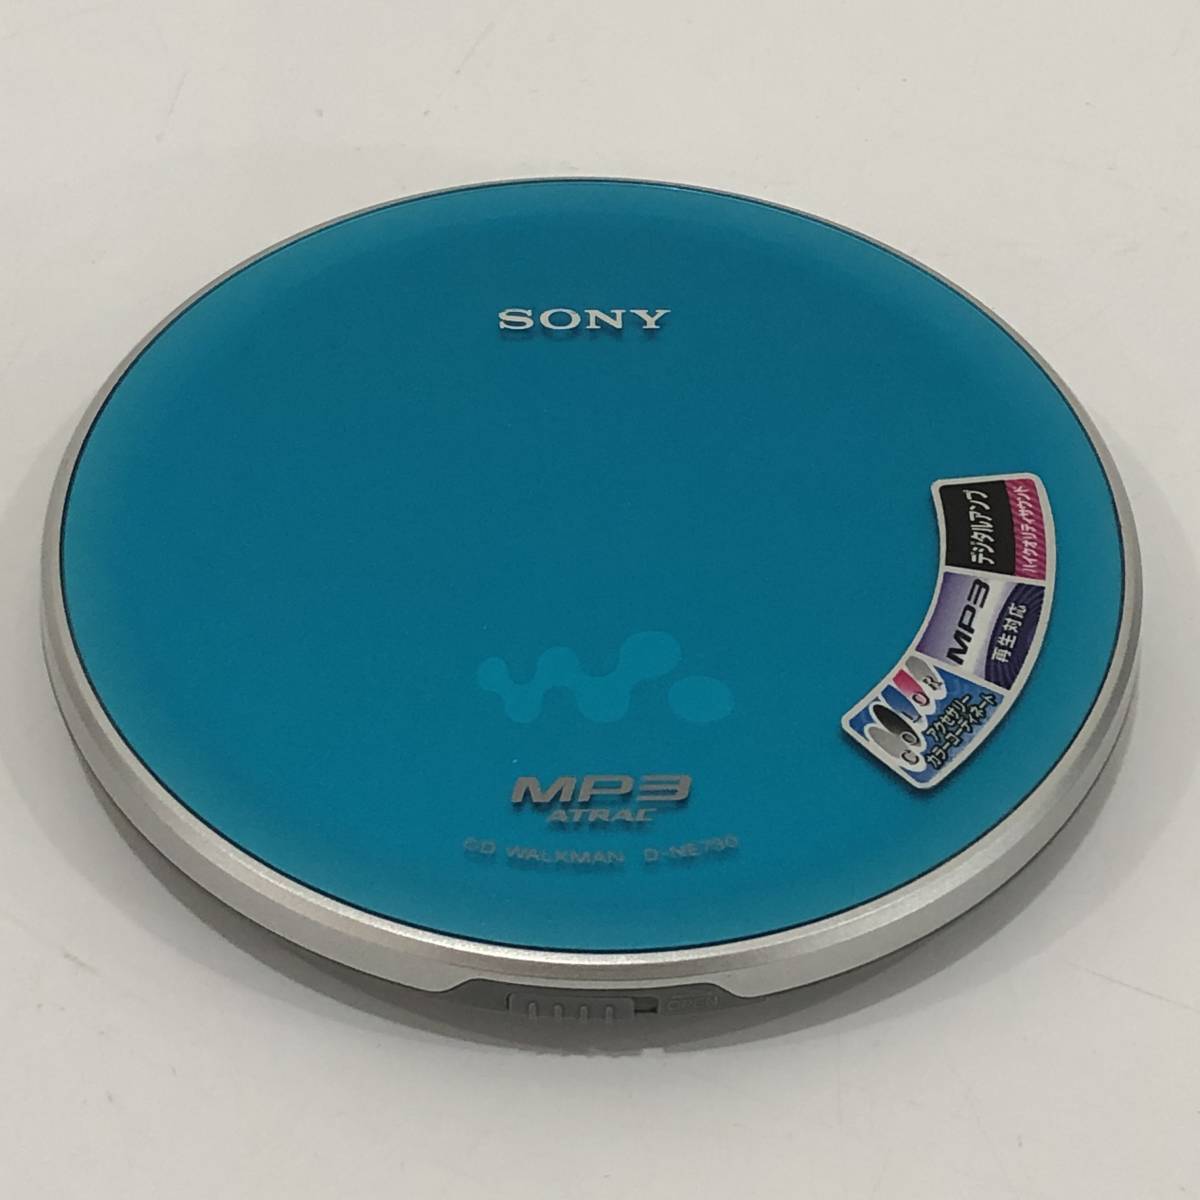 * operation goods Sony D-NE730 CD Walkman SONY blue CD player remote control attaching portable music reproduction WALKMAN S2733